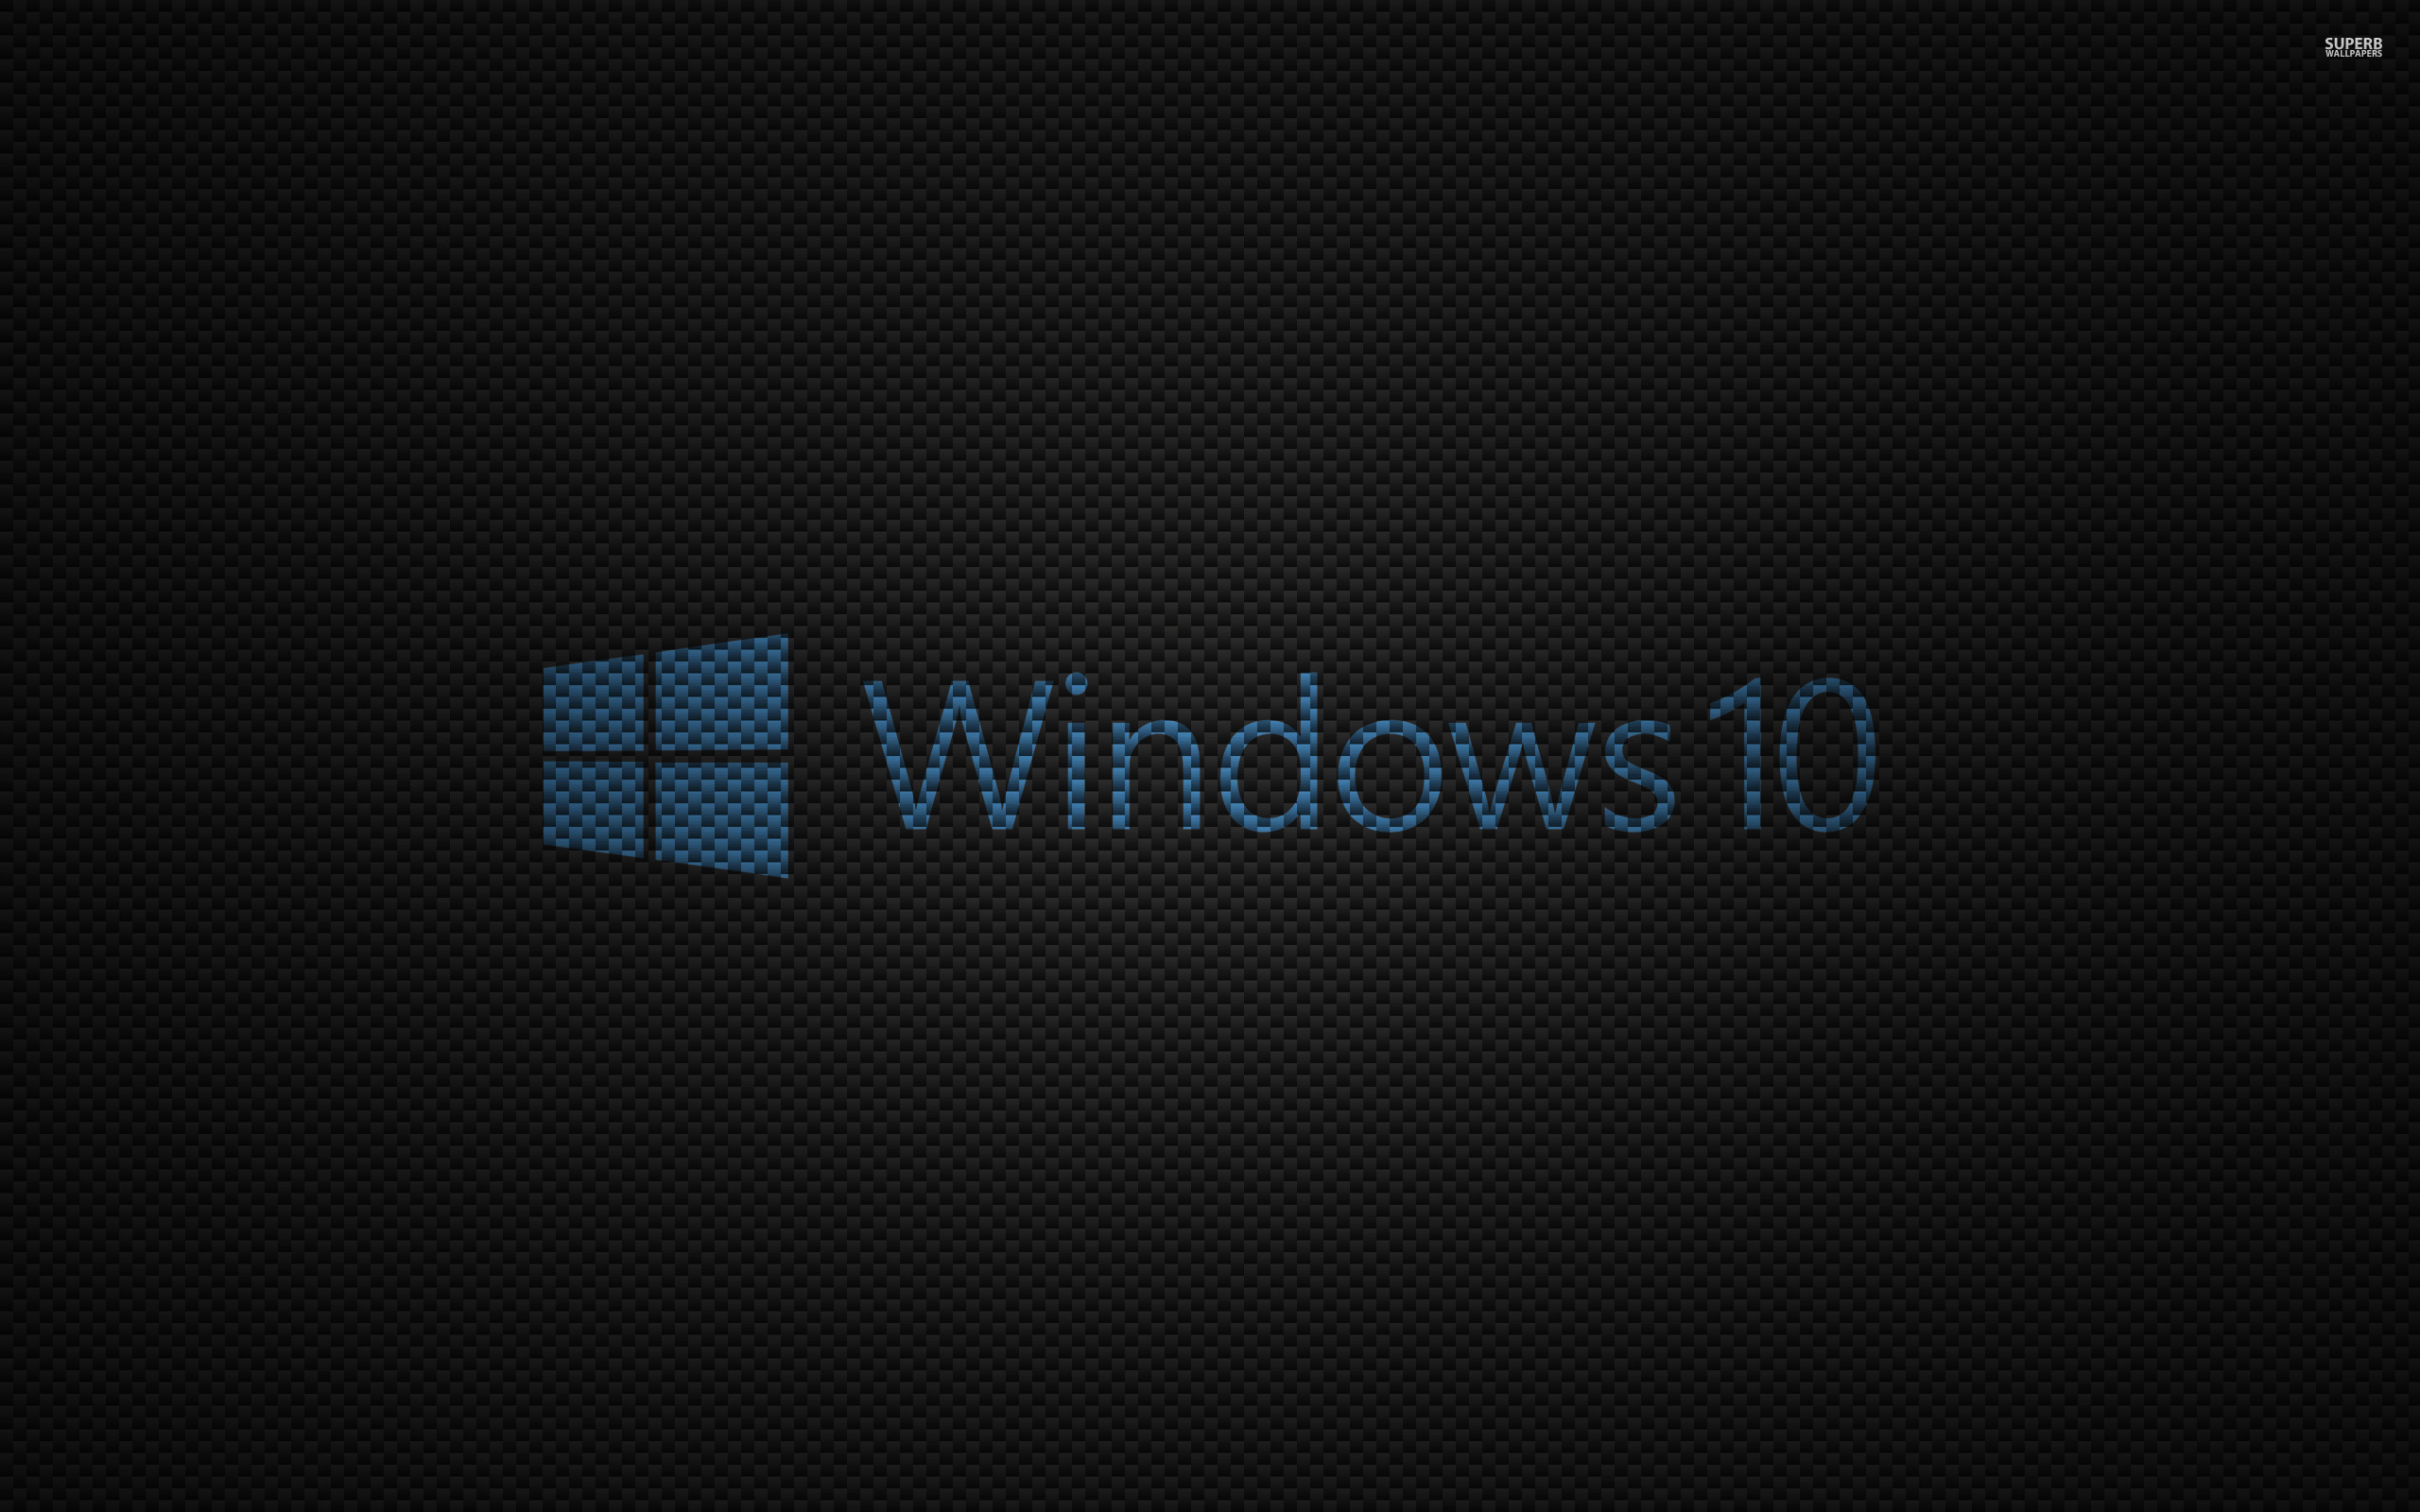 Windows 10 text logo on carbon fiber wallpaper - Computer ...